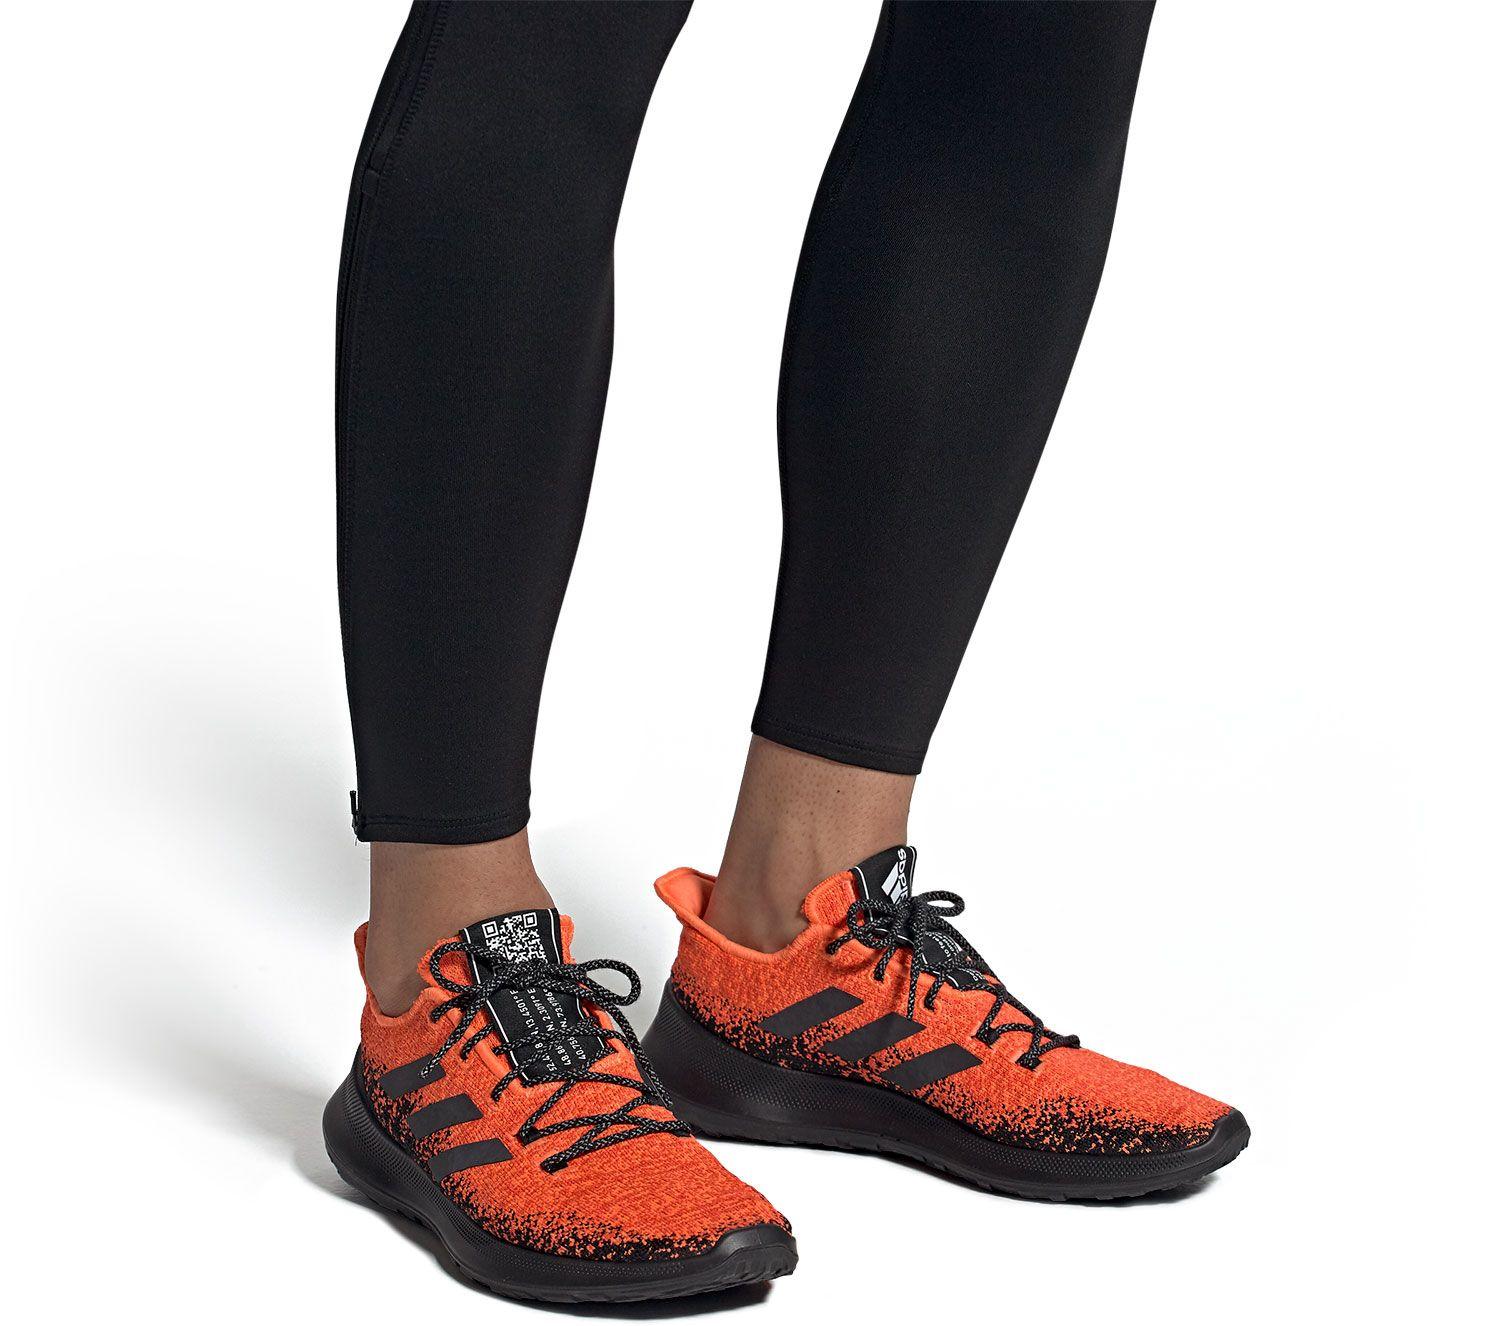 adidas Sensebounce+ Running Shoes in 